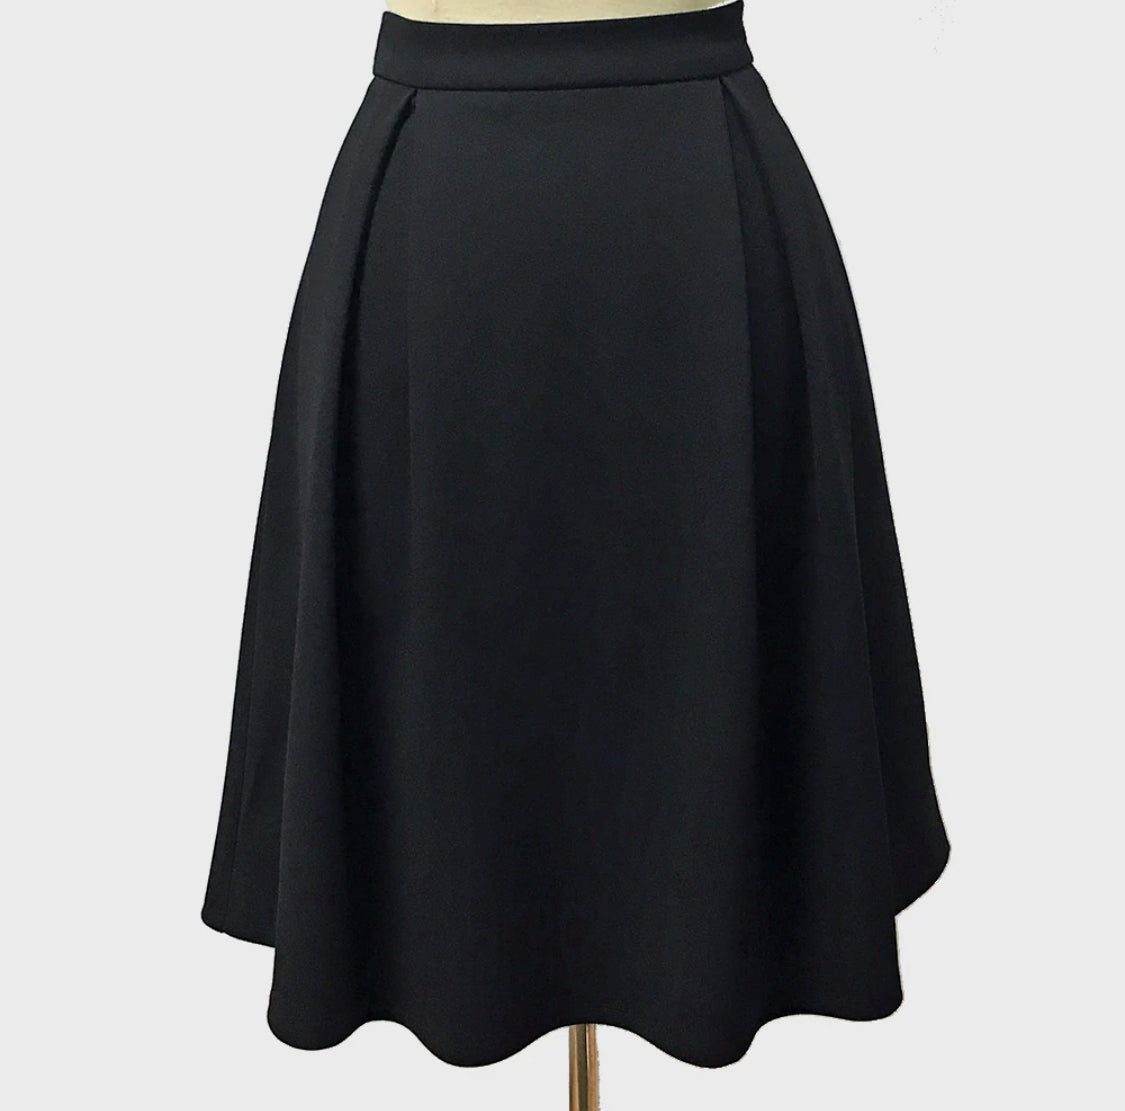 Box Pleated Skirt in Black